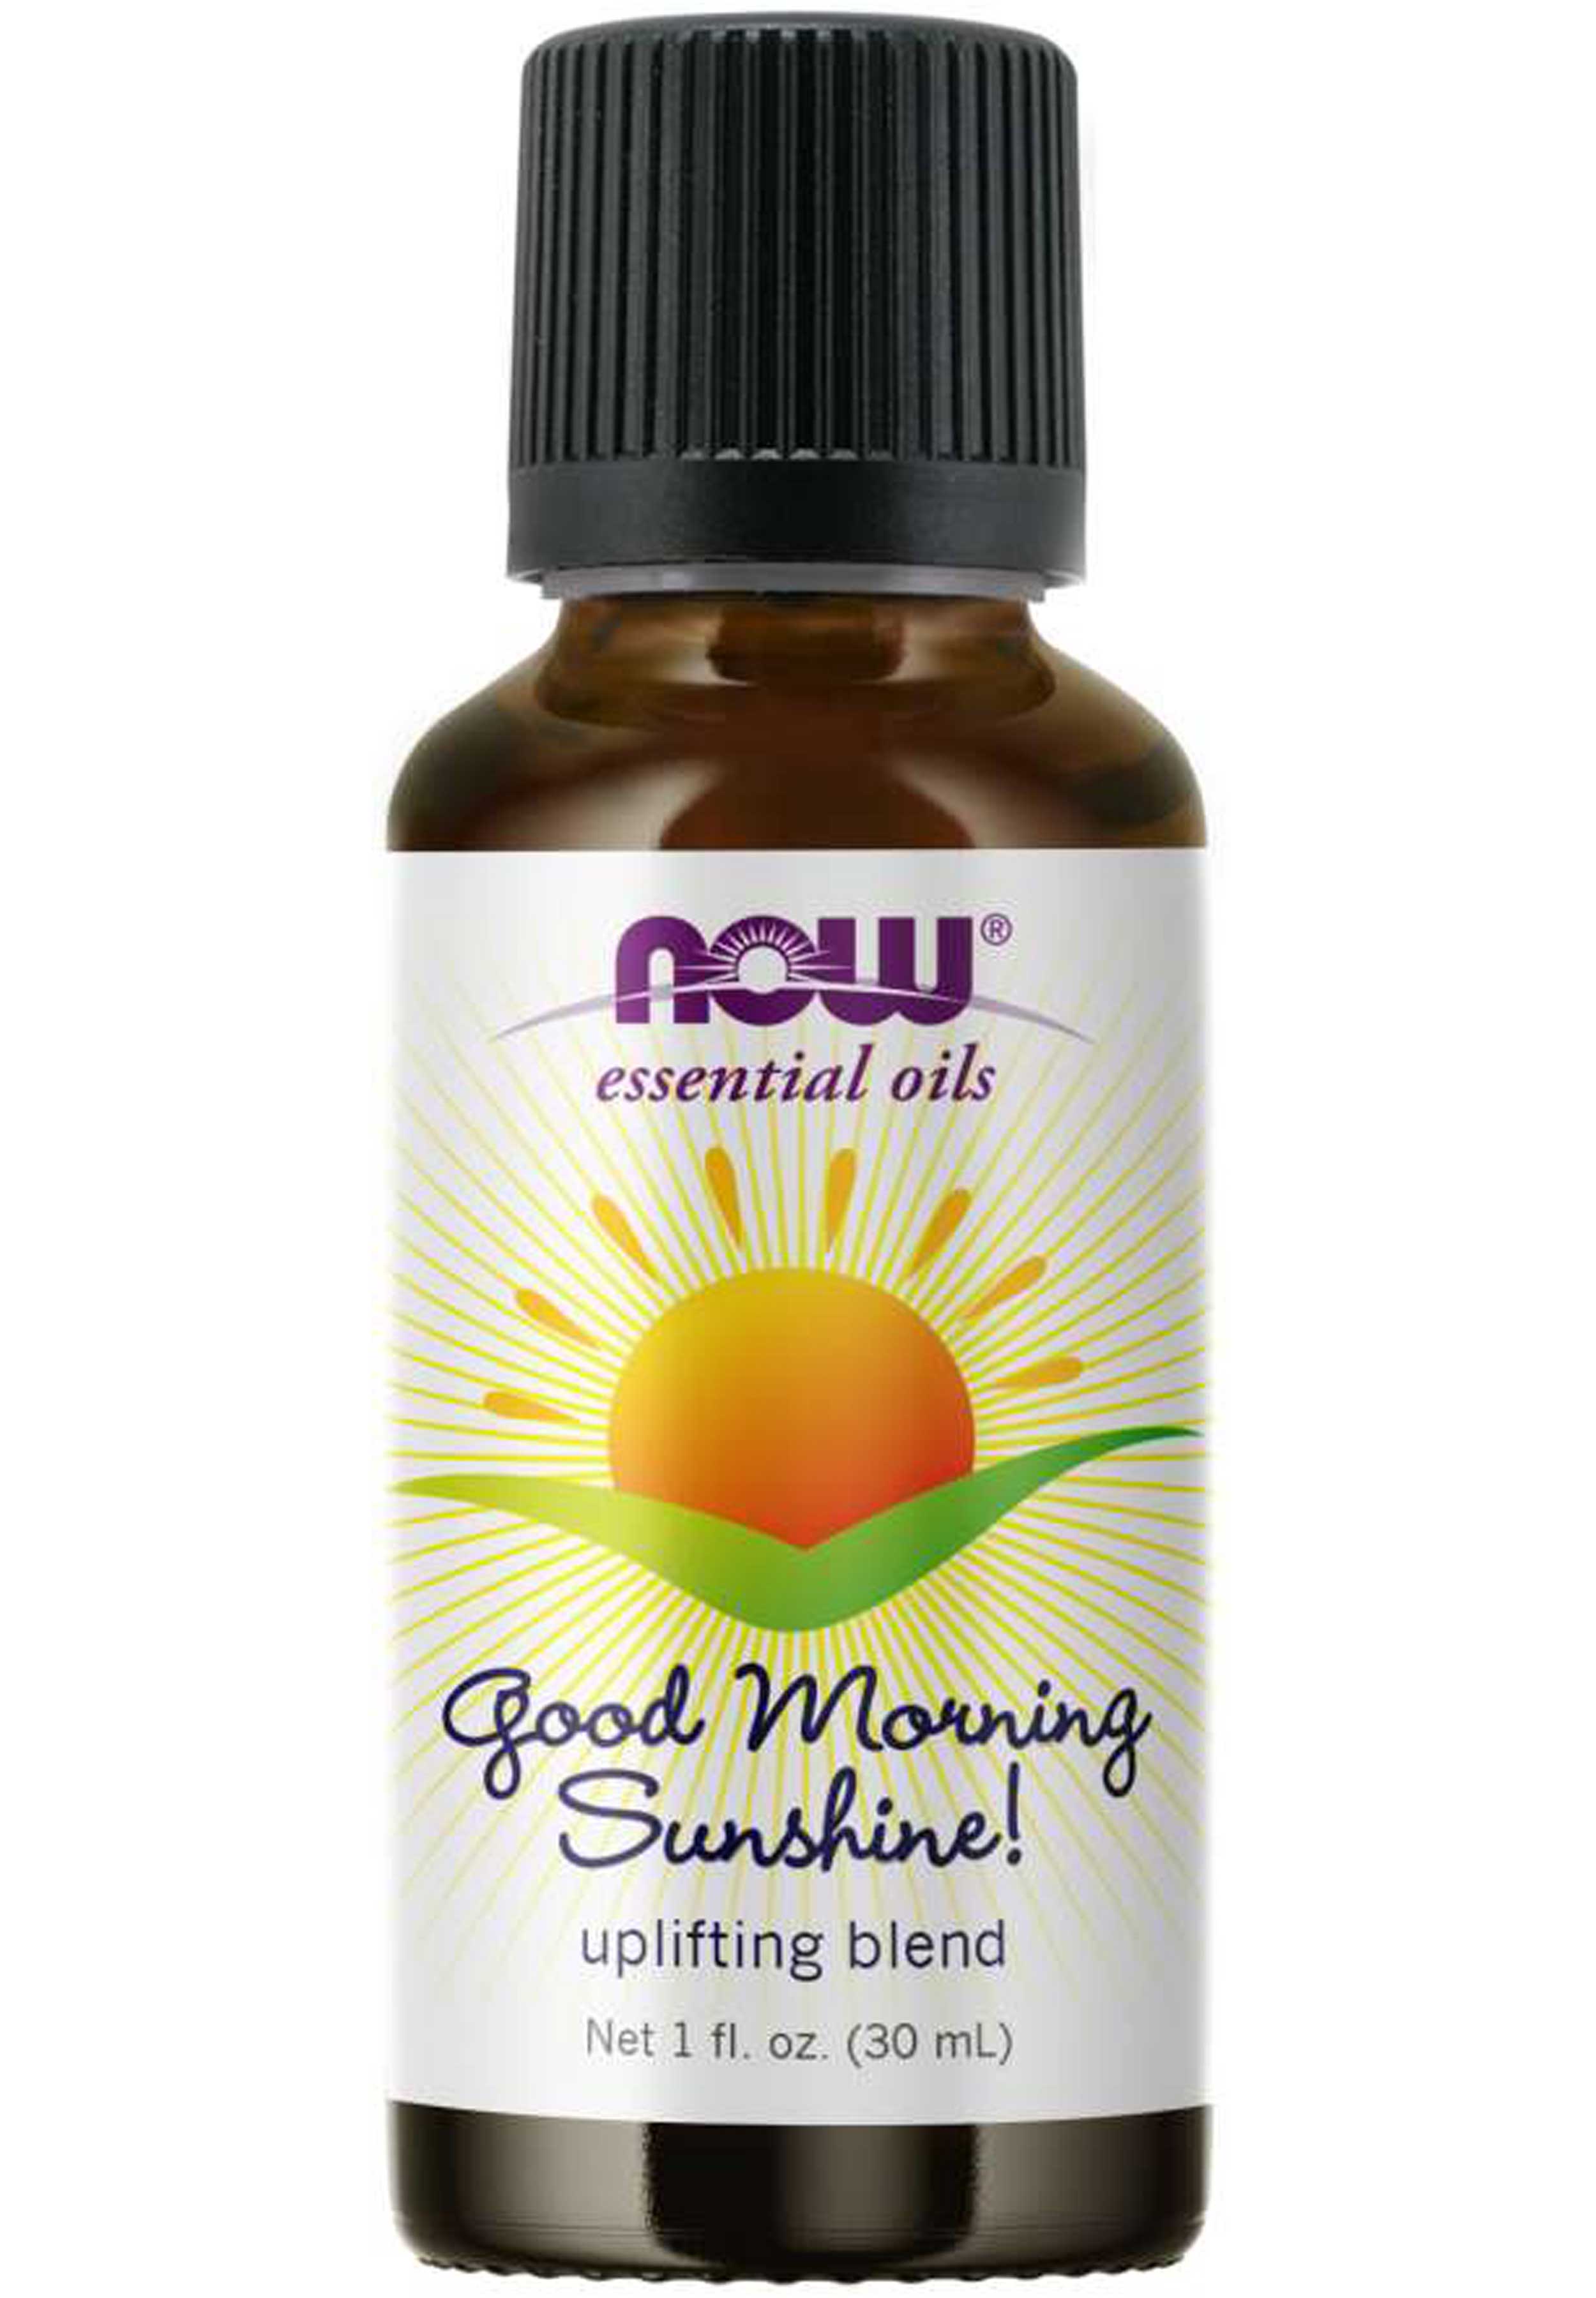 NOW Essential Oils Good Morning Sunshine Oil Blend